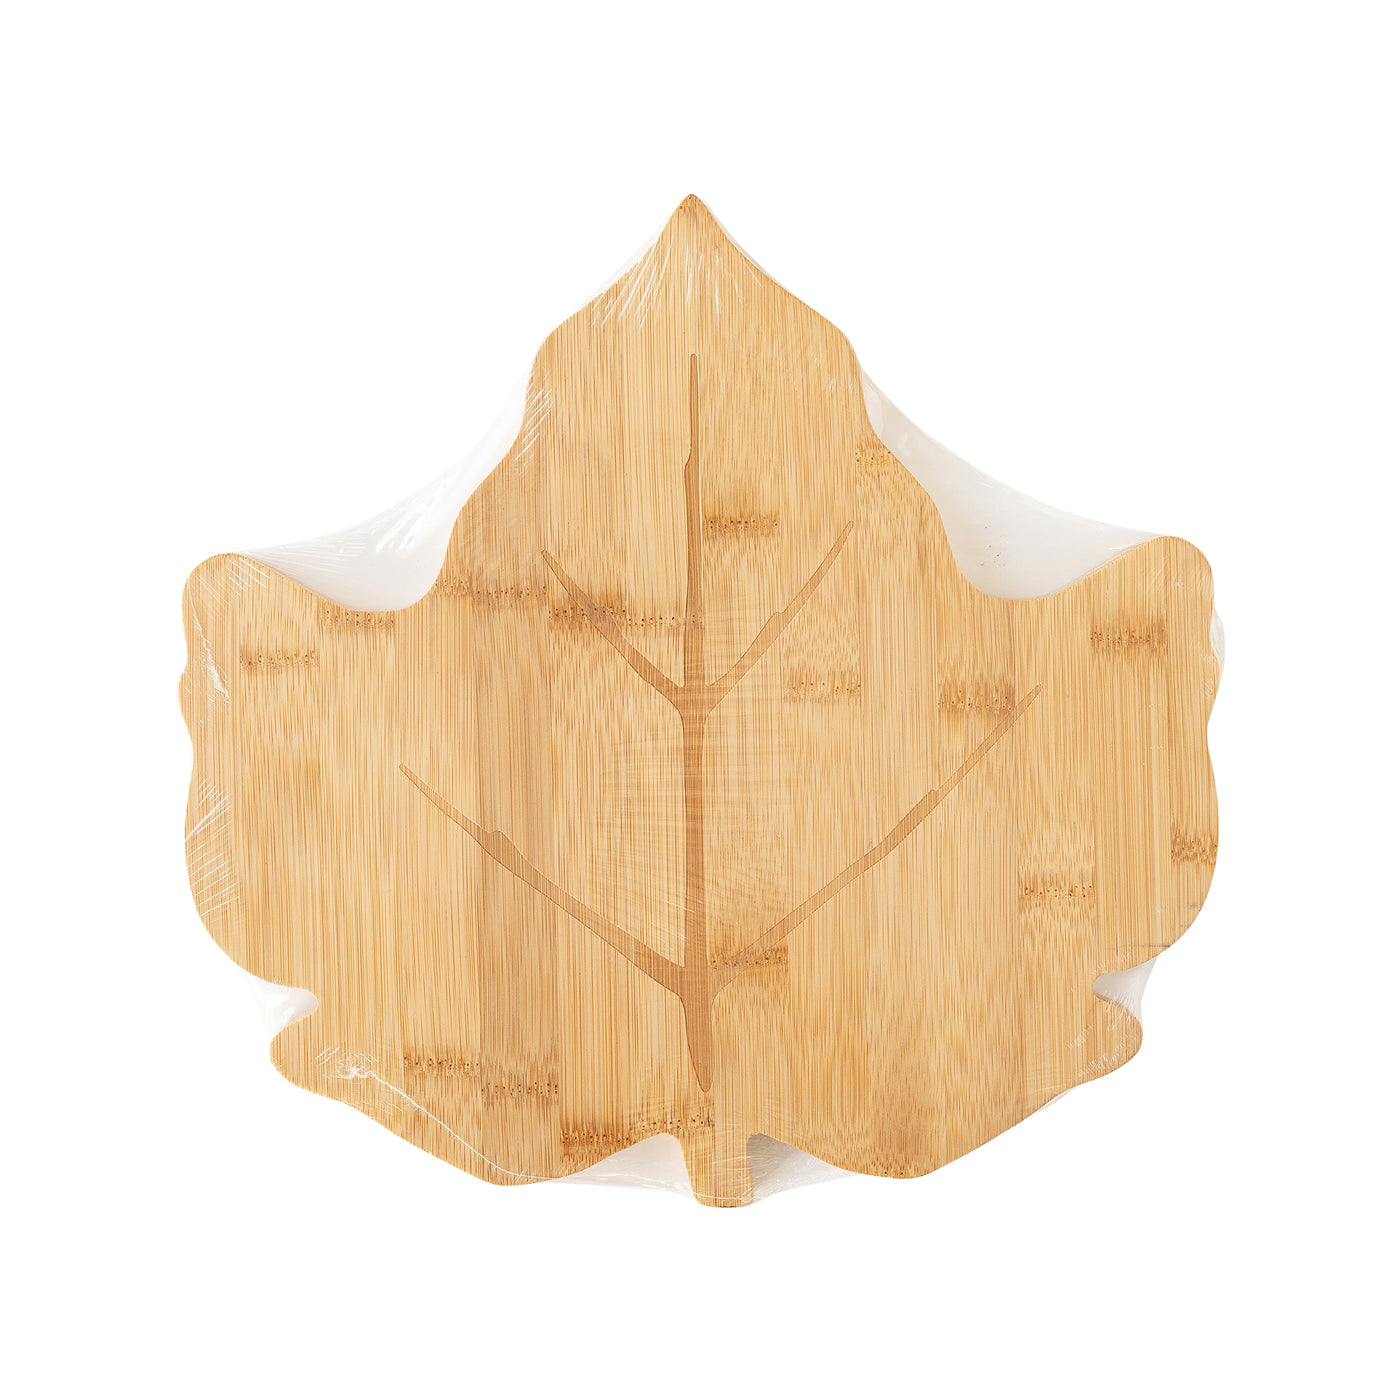 THP1129 - Leaf Wood Board